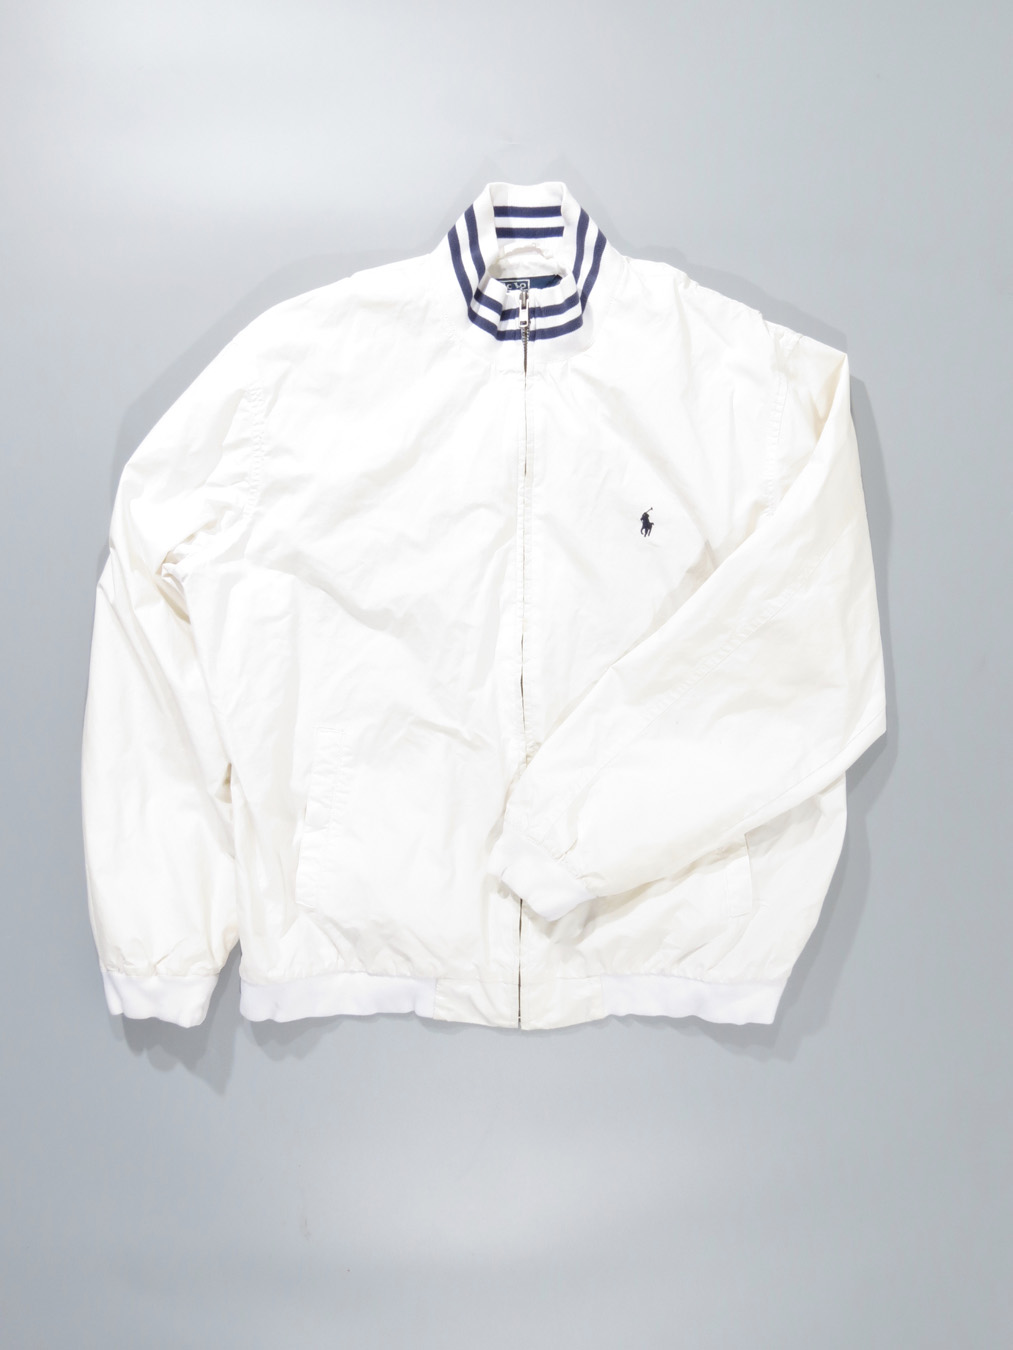 polo ralph lauren white jacket